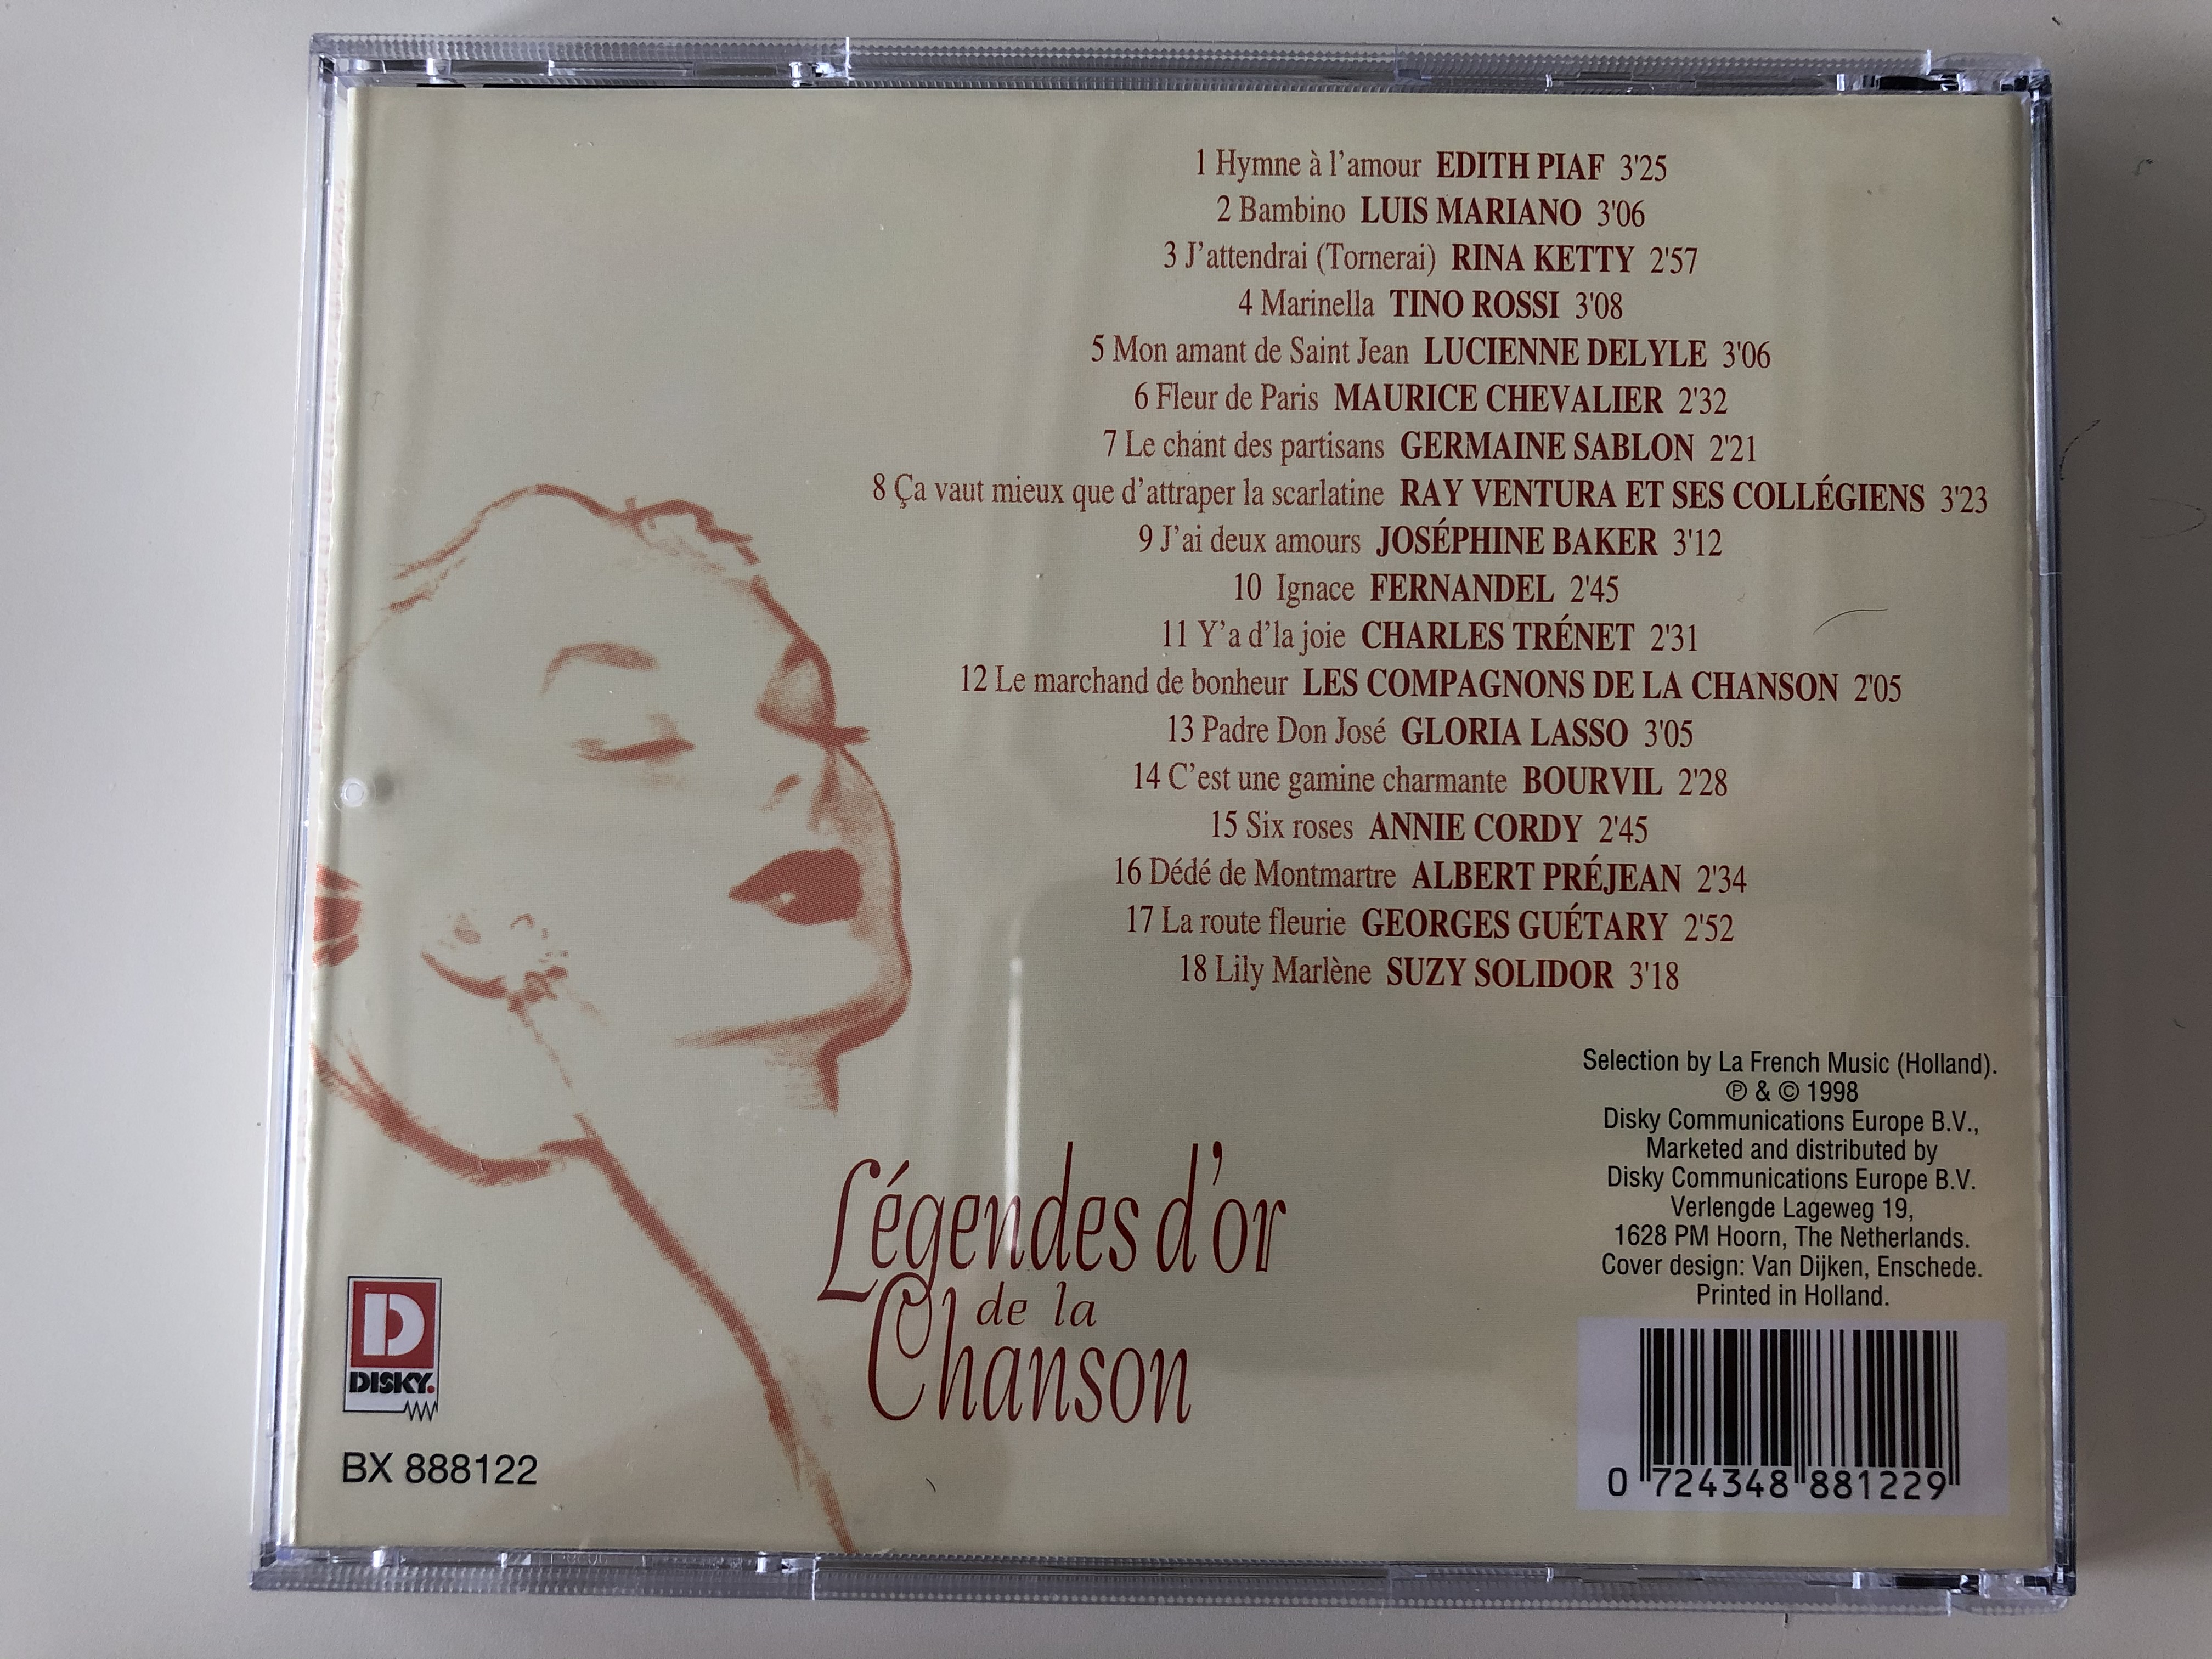 l-gendes-d-or-de-la-chanson-luis-mariano-maurice-chevalier-josephine-baker-fernandel-annie-cordy-cd-2-disky-audio-cd-1998-bx-888122-4-.jpg